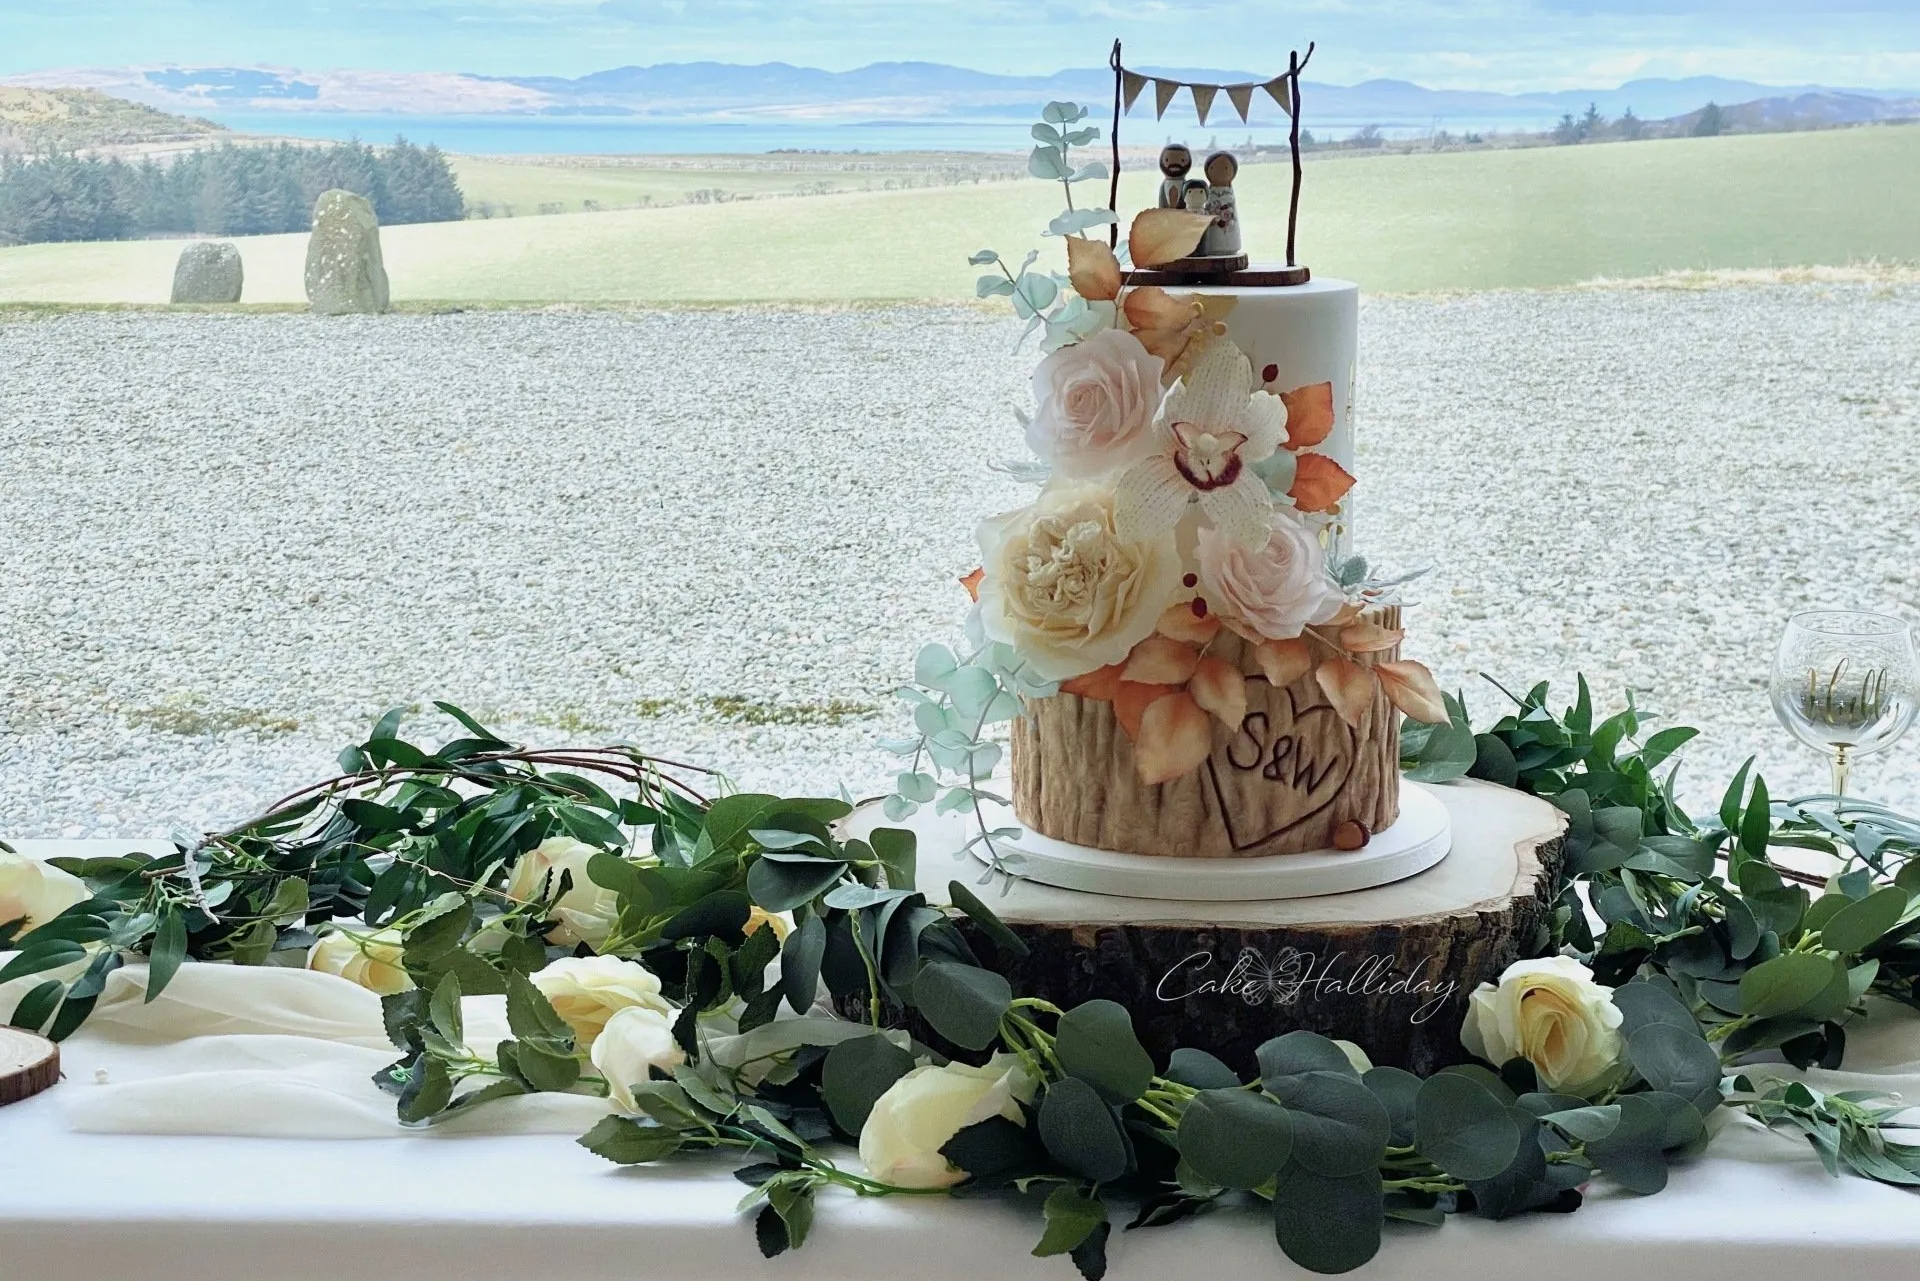 Log tier & sugar flower wedding cake at Crear